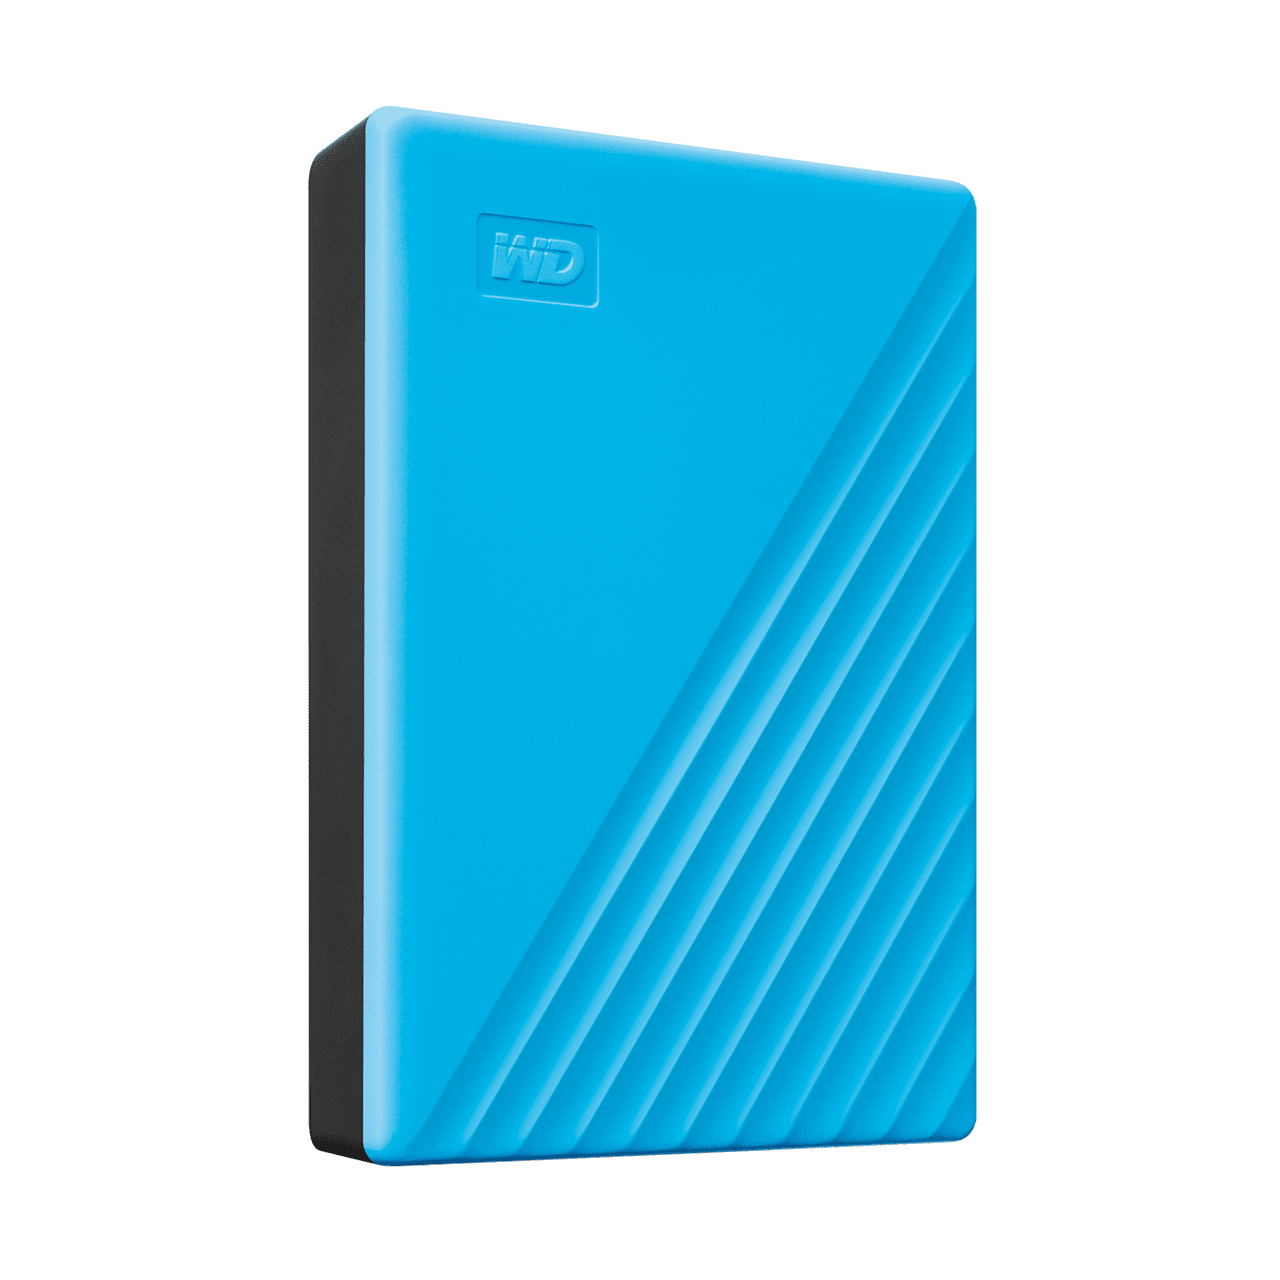 WD MyPassport 5Tb 可攜式外置硬碟 (藍色)